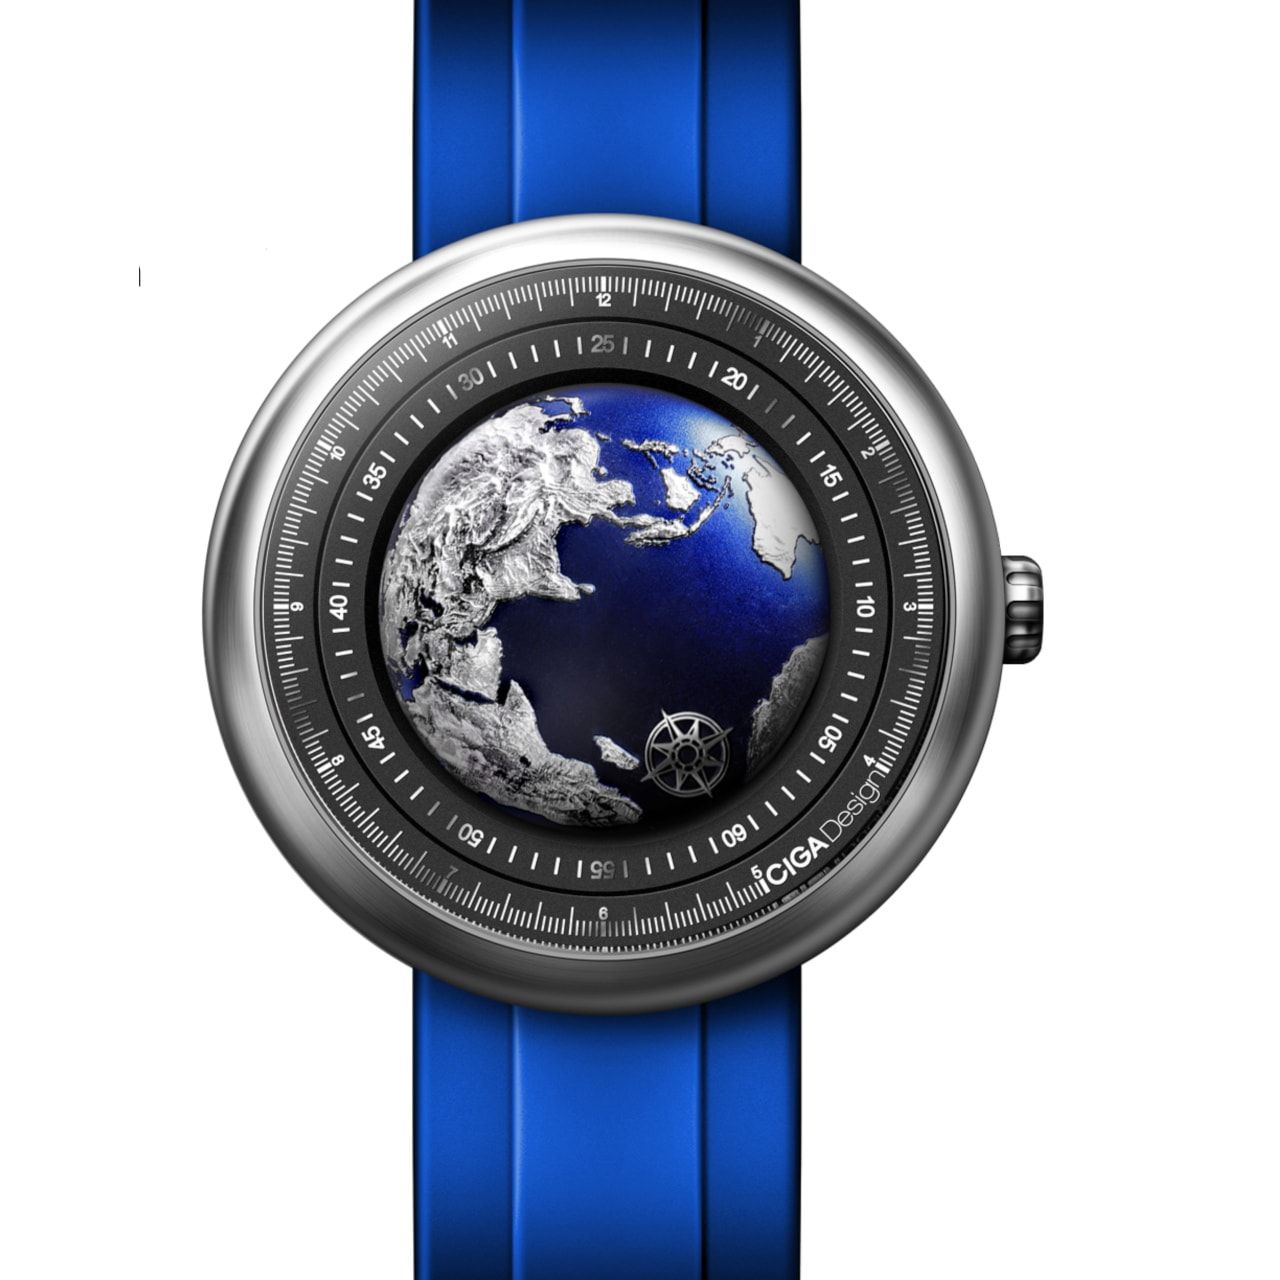 Gphg Challenge Watch Prize Ciga Design